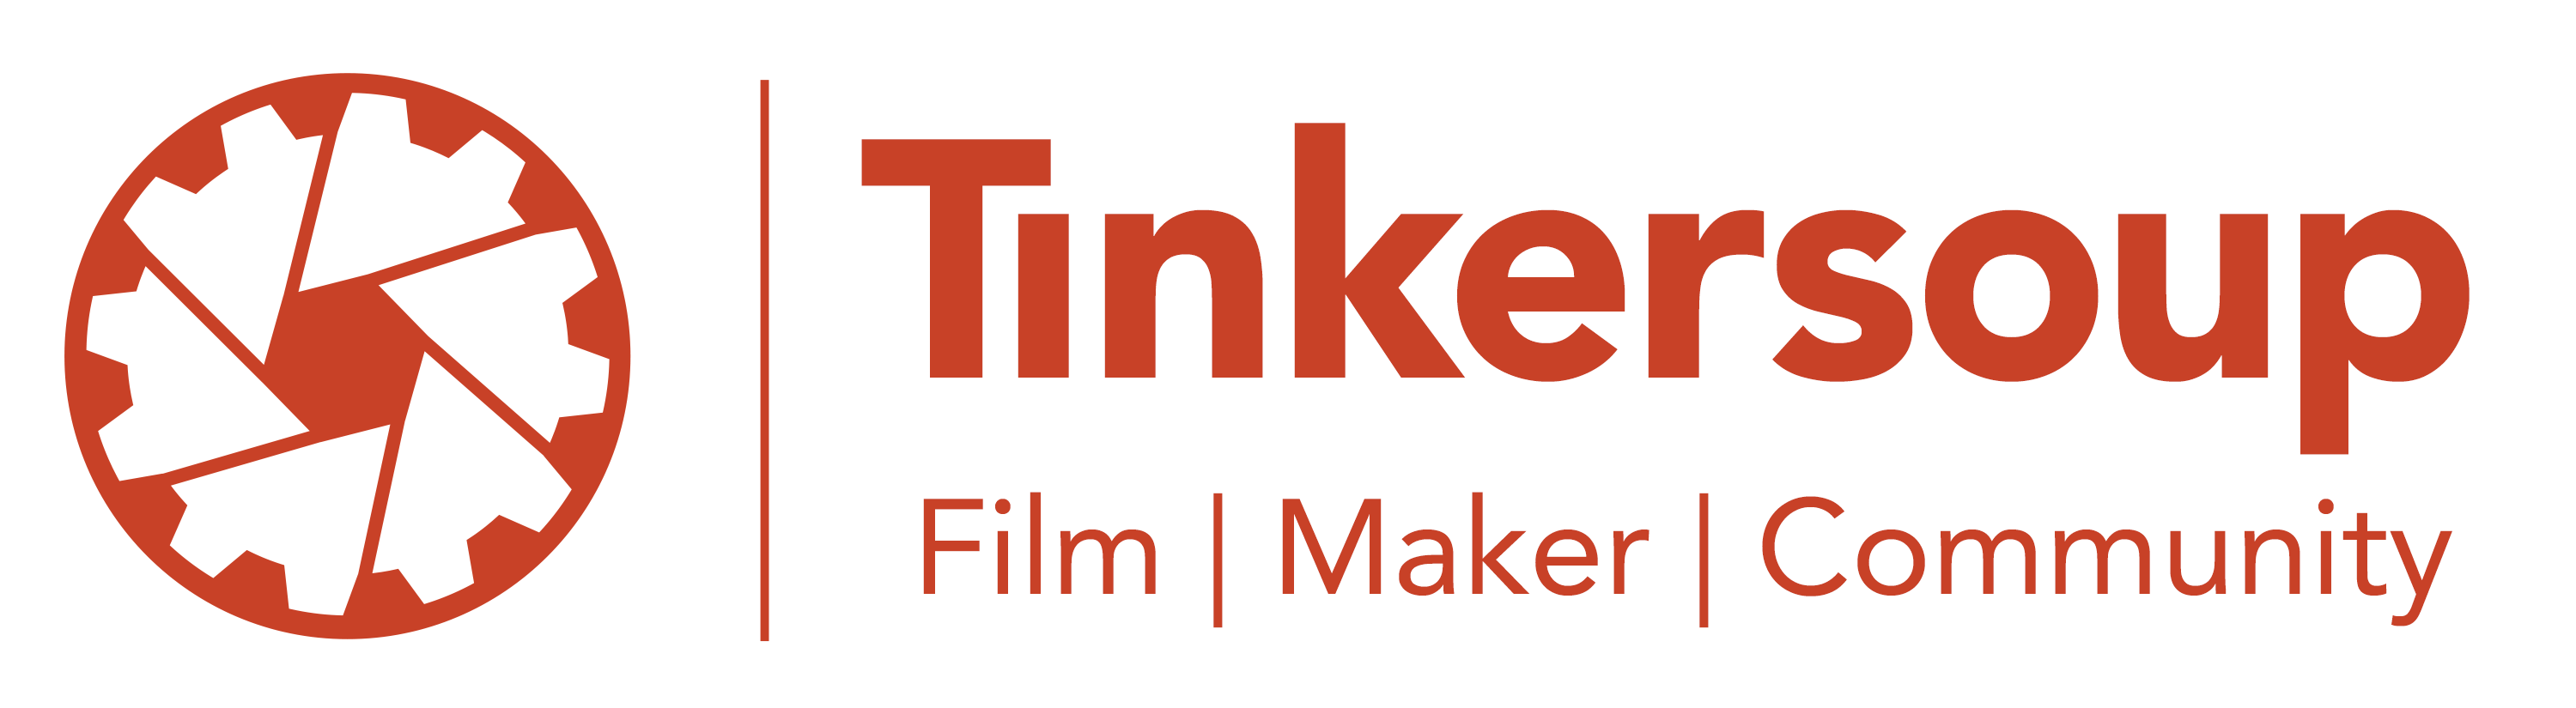 Tinkersoup - Film | Maker | Community